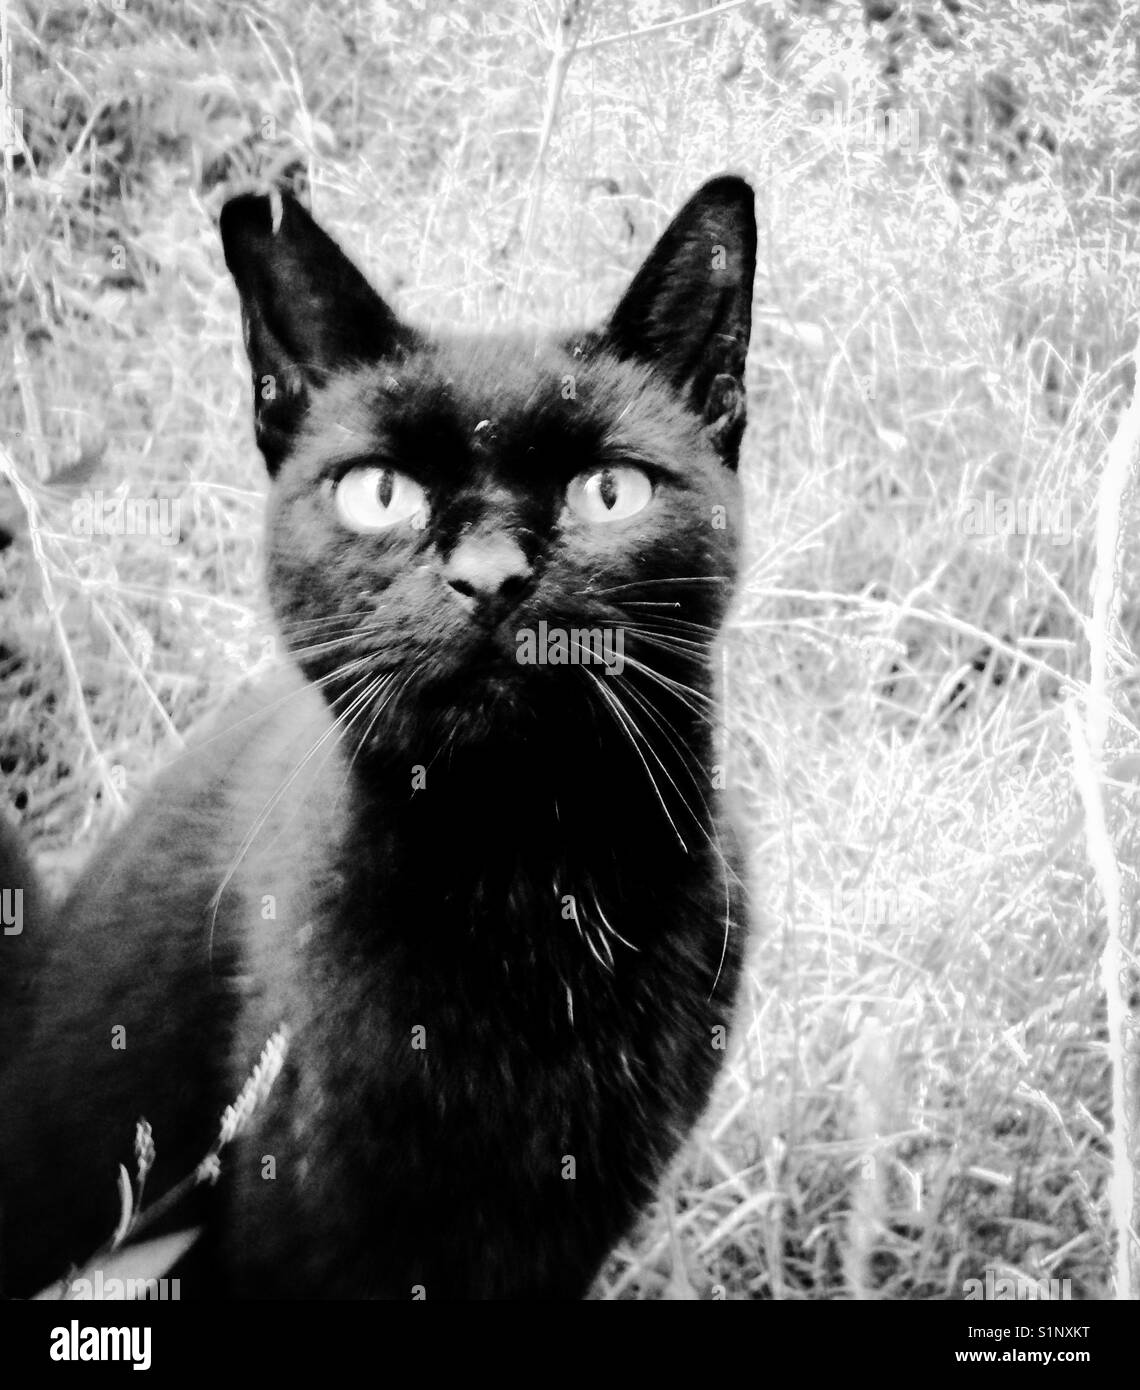 Black cat on alert Stock Photo